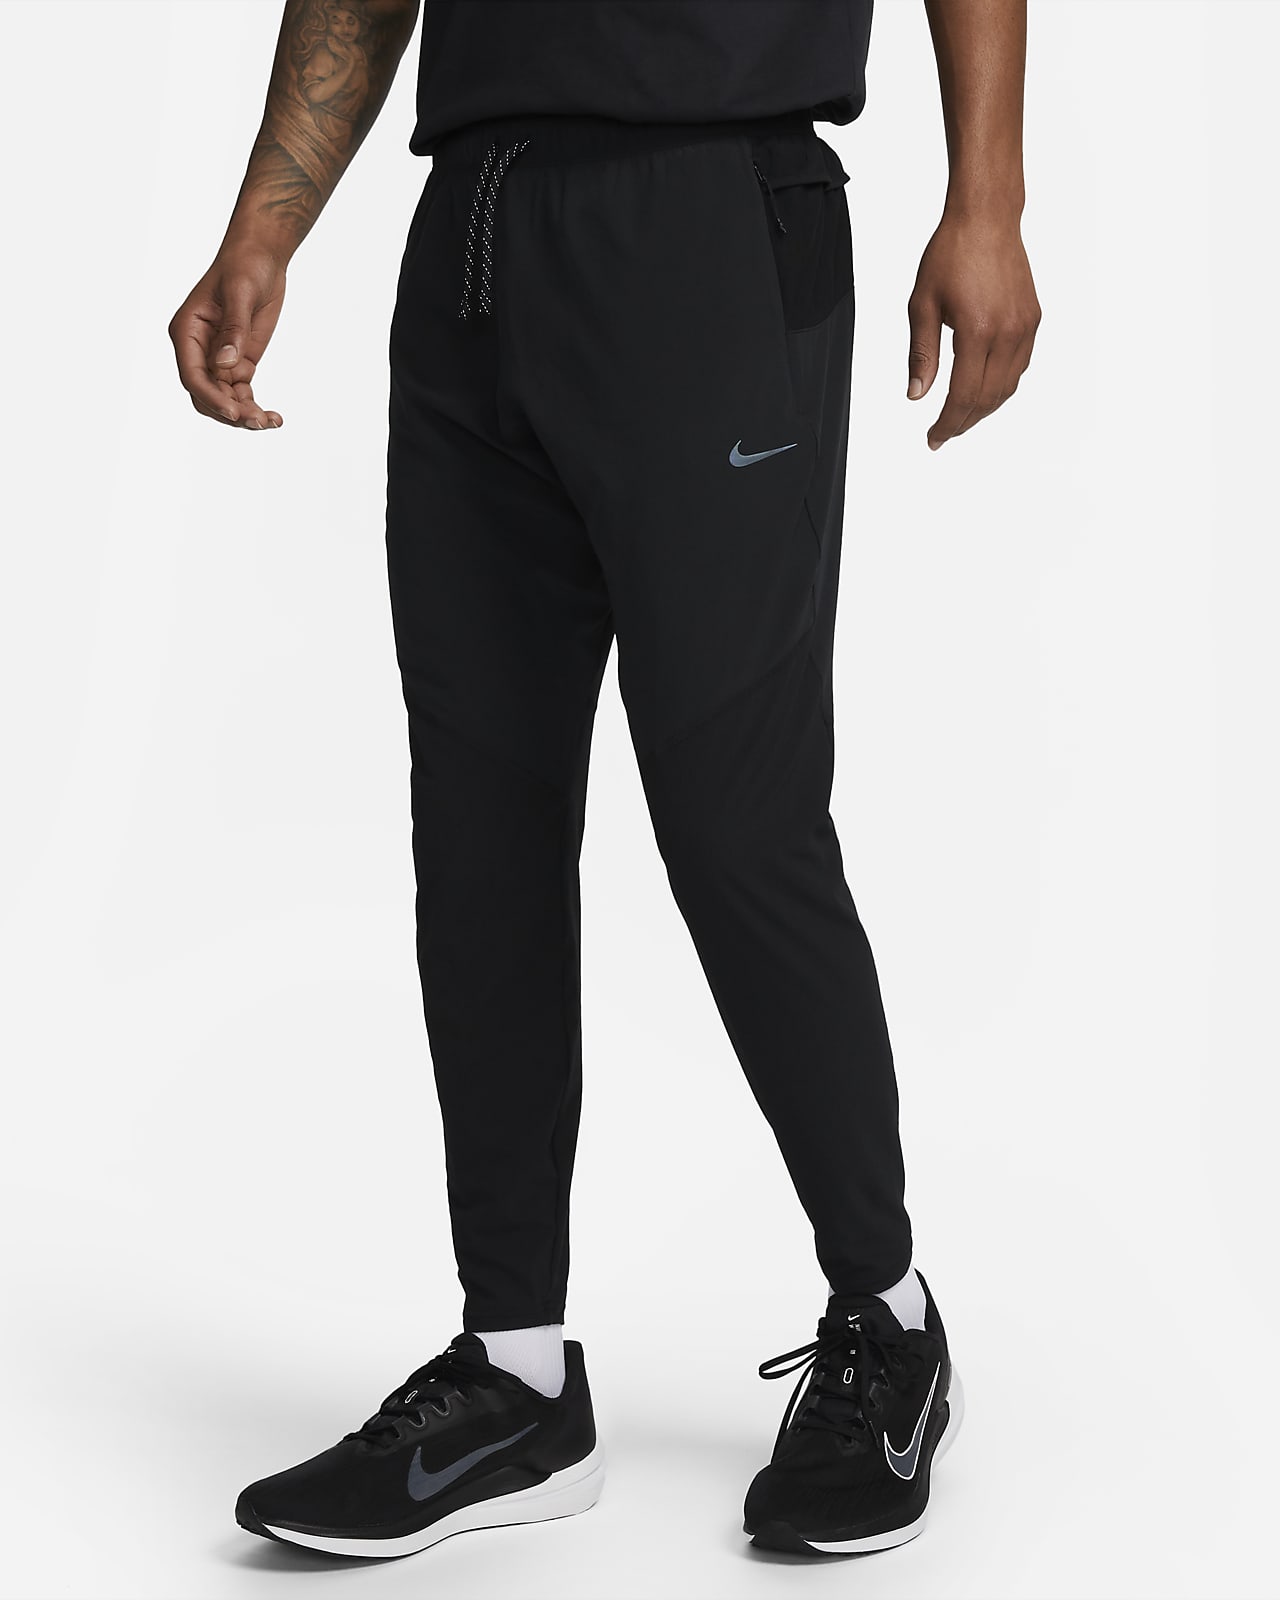 Nike Dri-FIT Running Division Phenom Pantalons d'ajust entallat de running - Home